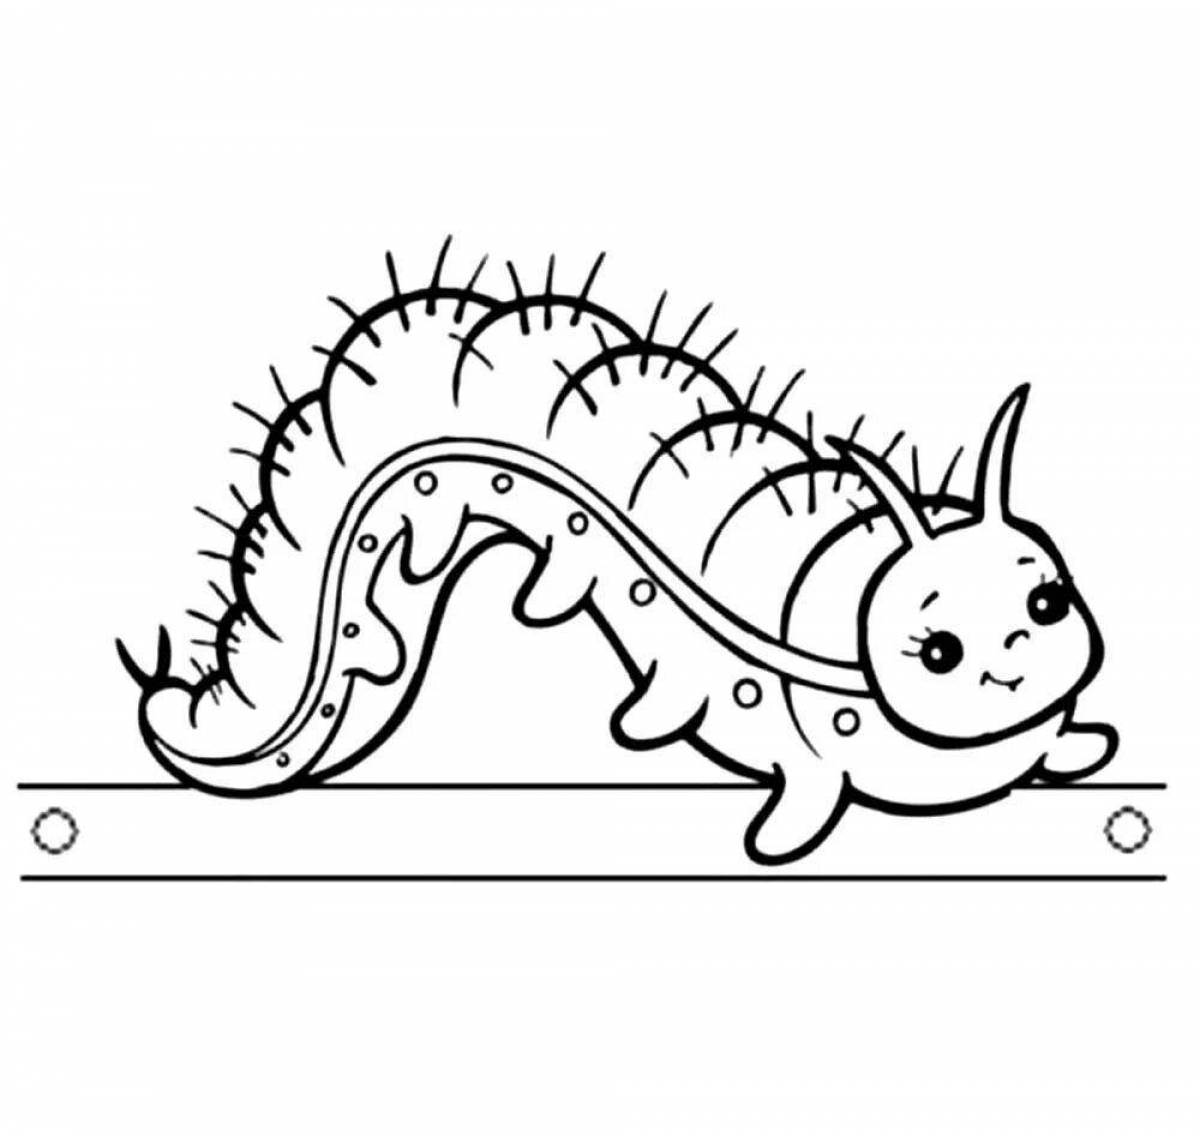 Magic caterpillar coloring book for kids